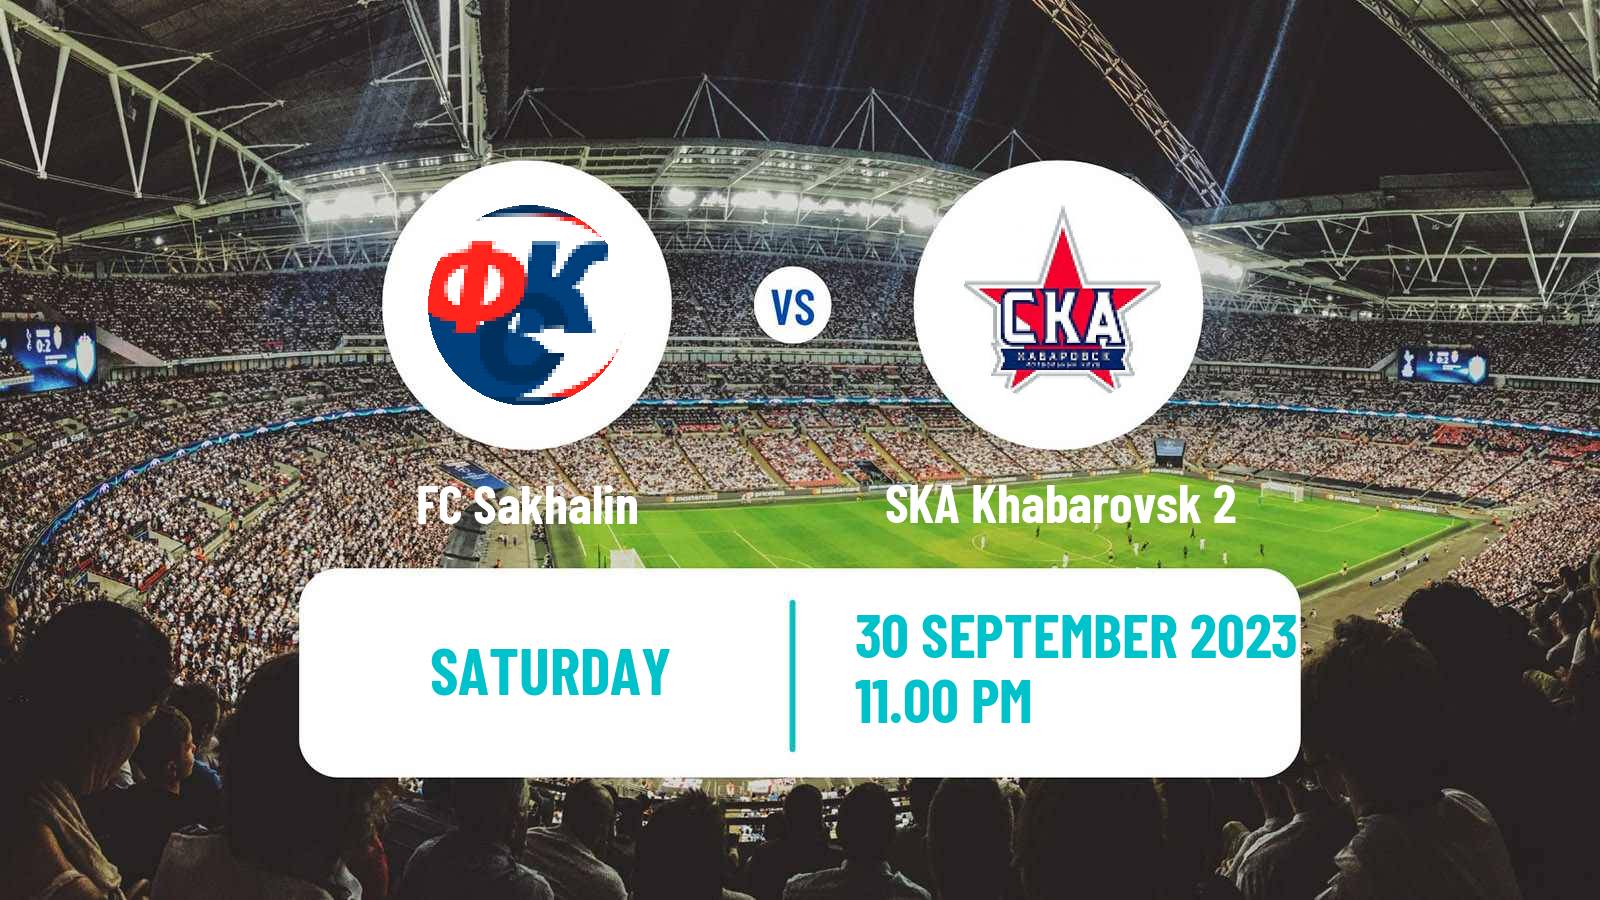 Soccer FNL 2 Division B Group 3 Sakhalin - SKA Khabarovsk 2